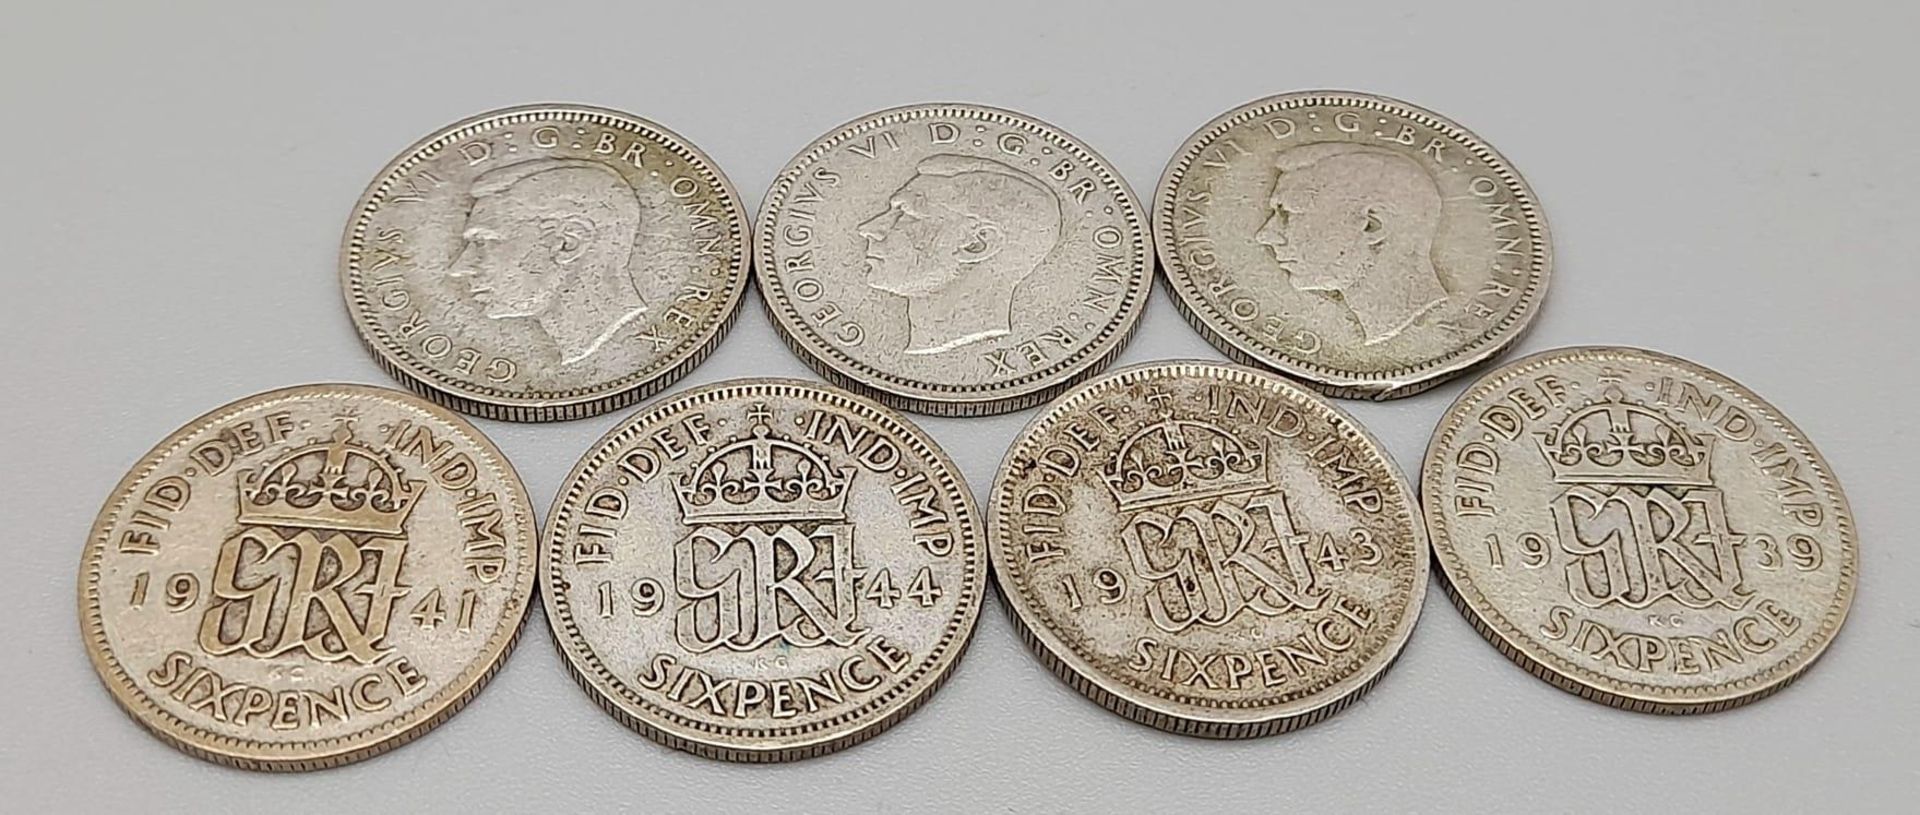 A Rare Full Set of 7 Fine Condition WW2 Silver Six Penny Coins 1939-1945. Inclusive (500 silver